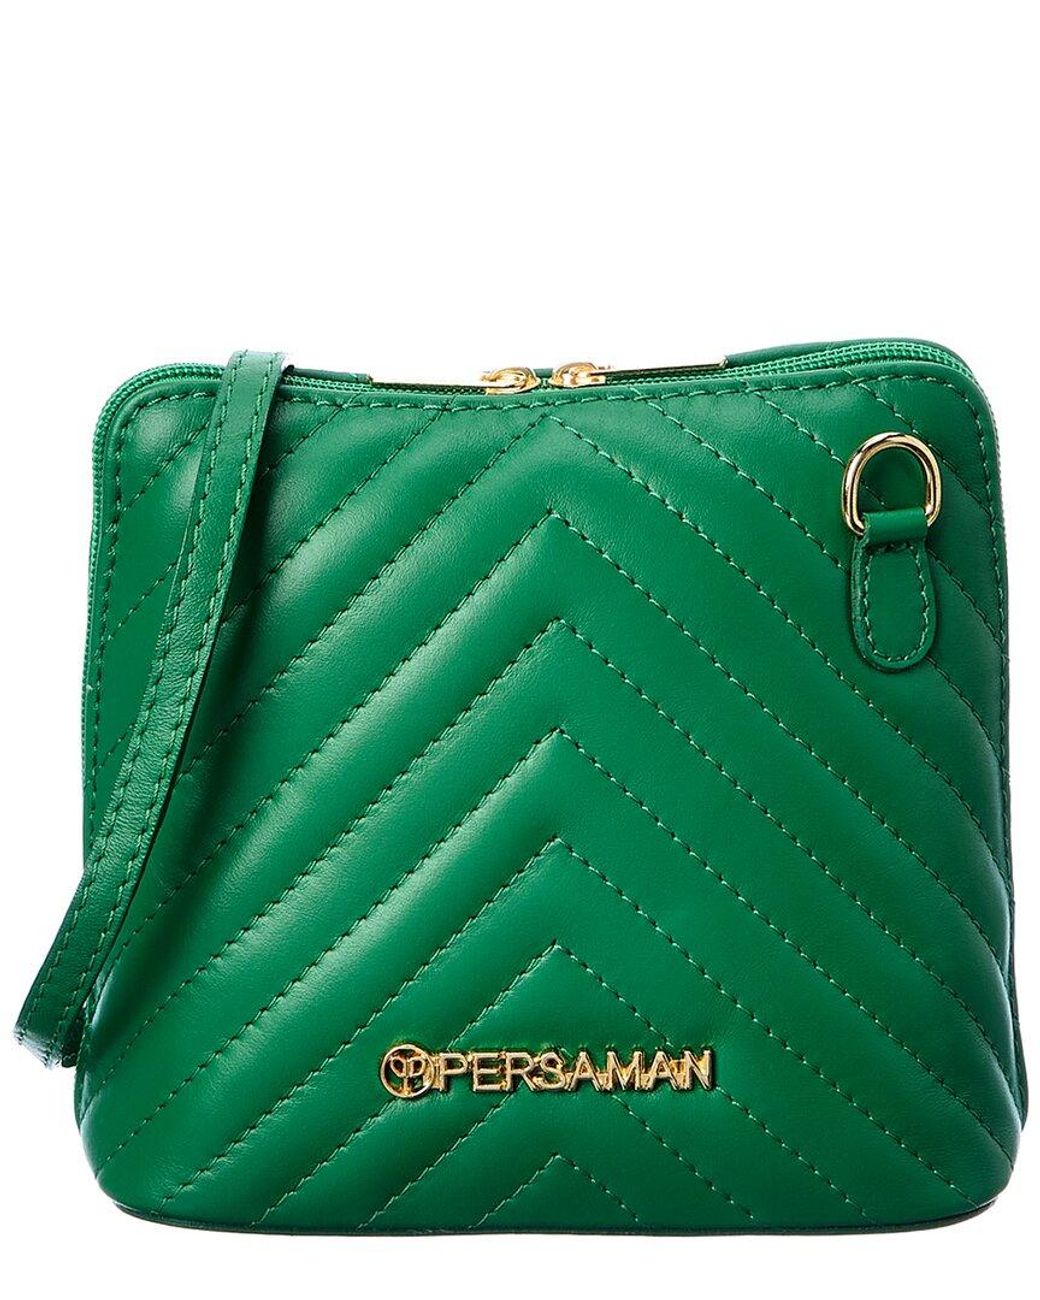 Persaman New York Demie Leather Crossbody in Green | Lyst UK